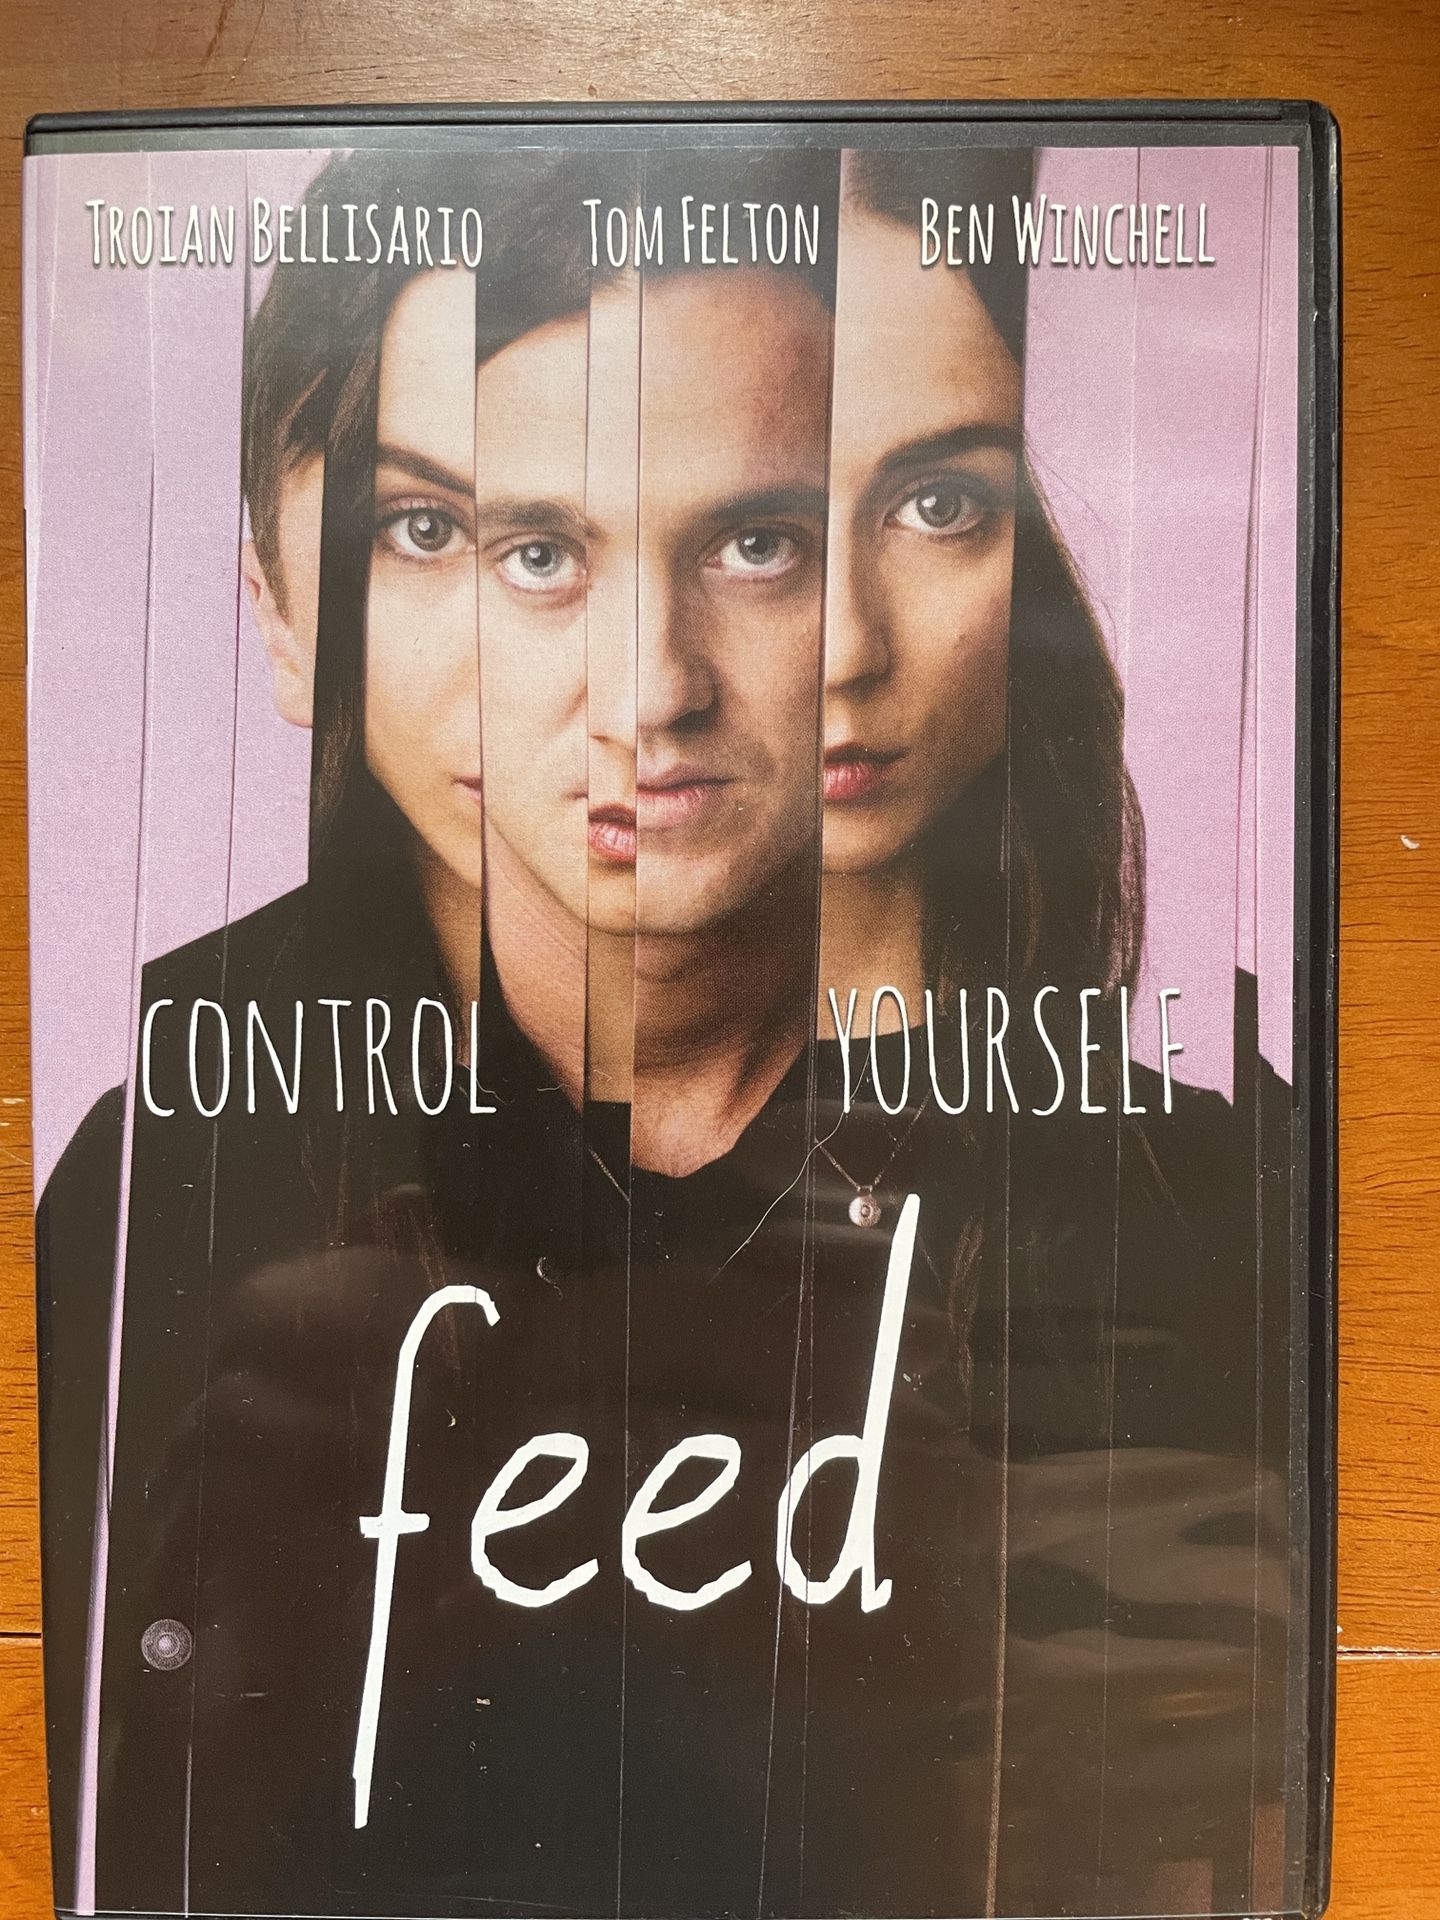 DVD: Feed 